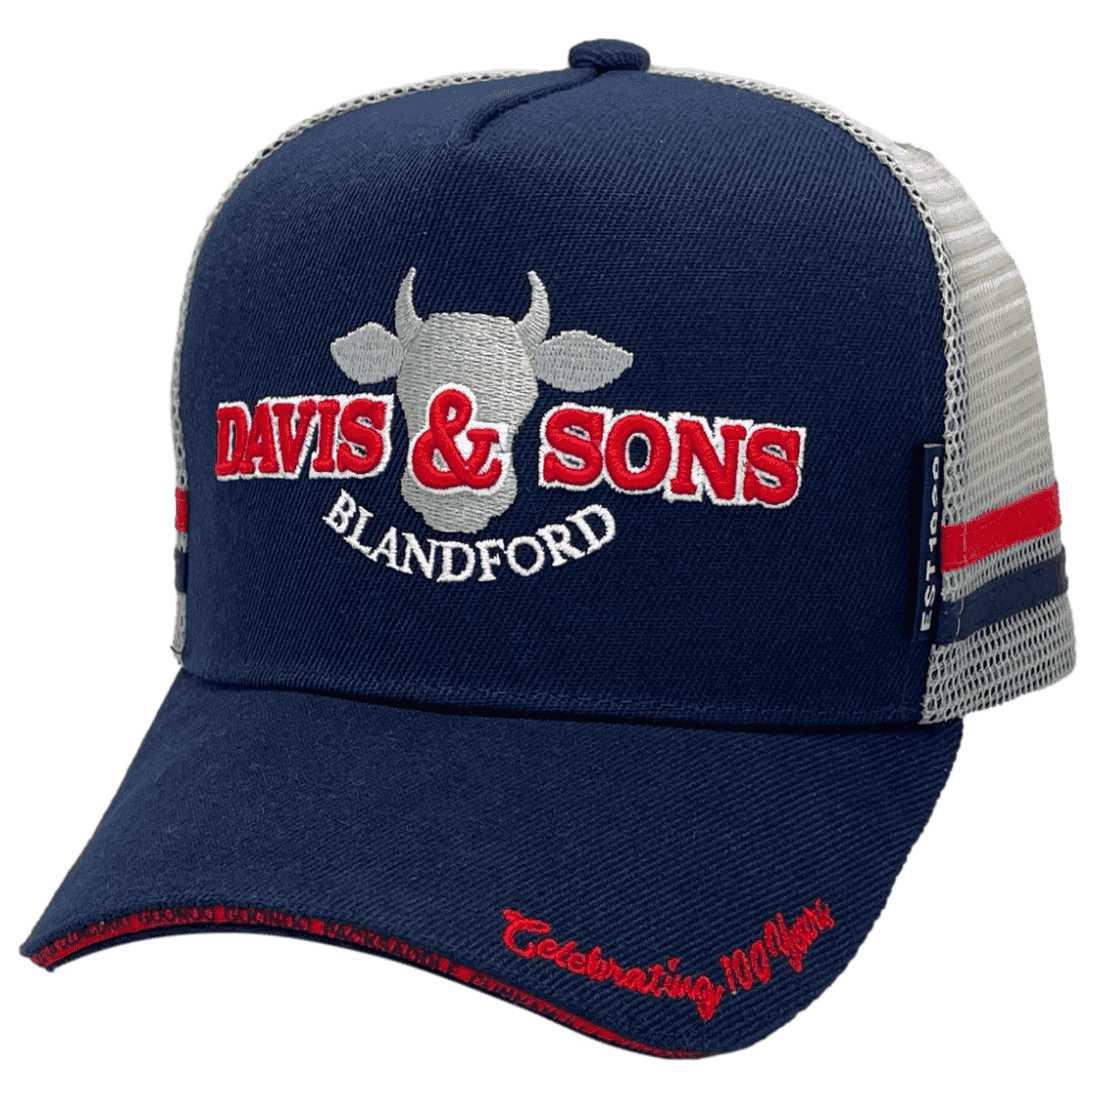 Davis & Son Blandford NSW HP Original Power Aussie Trucker Hat with Australian Head Fit Crown Size and 2 Side Bands Navy Red